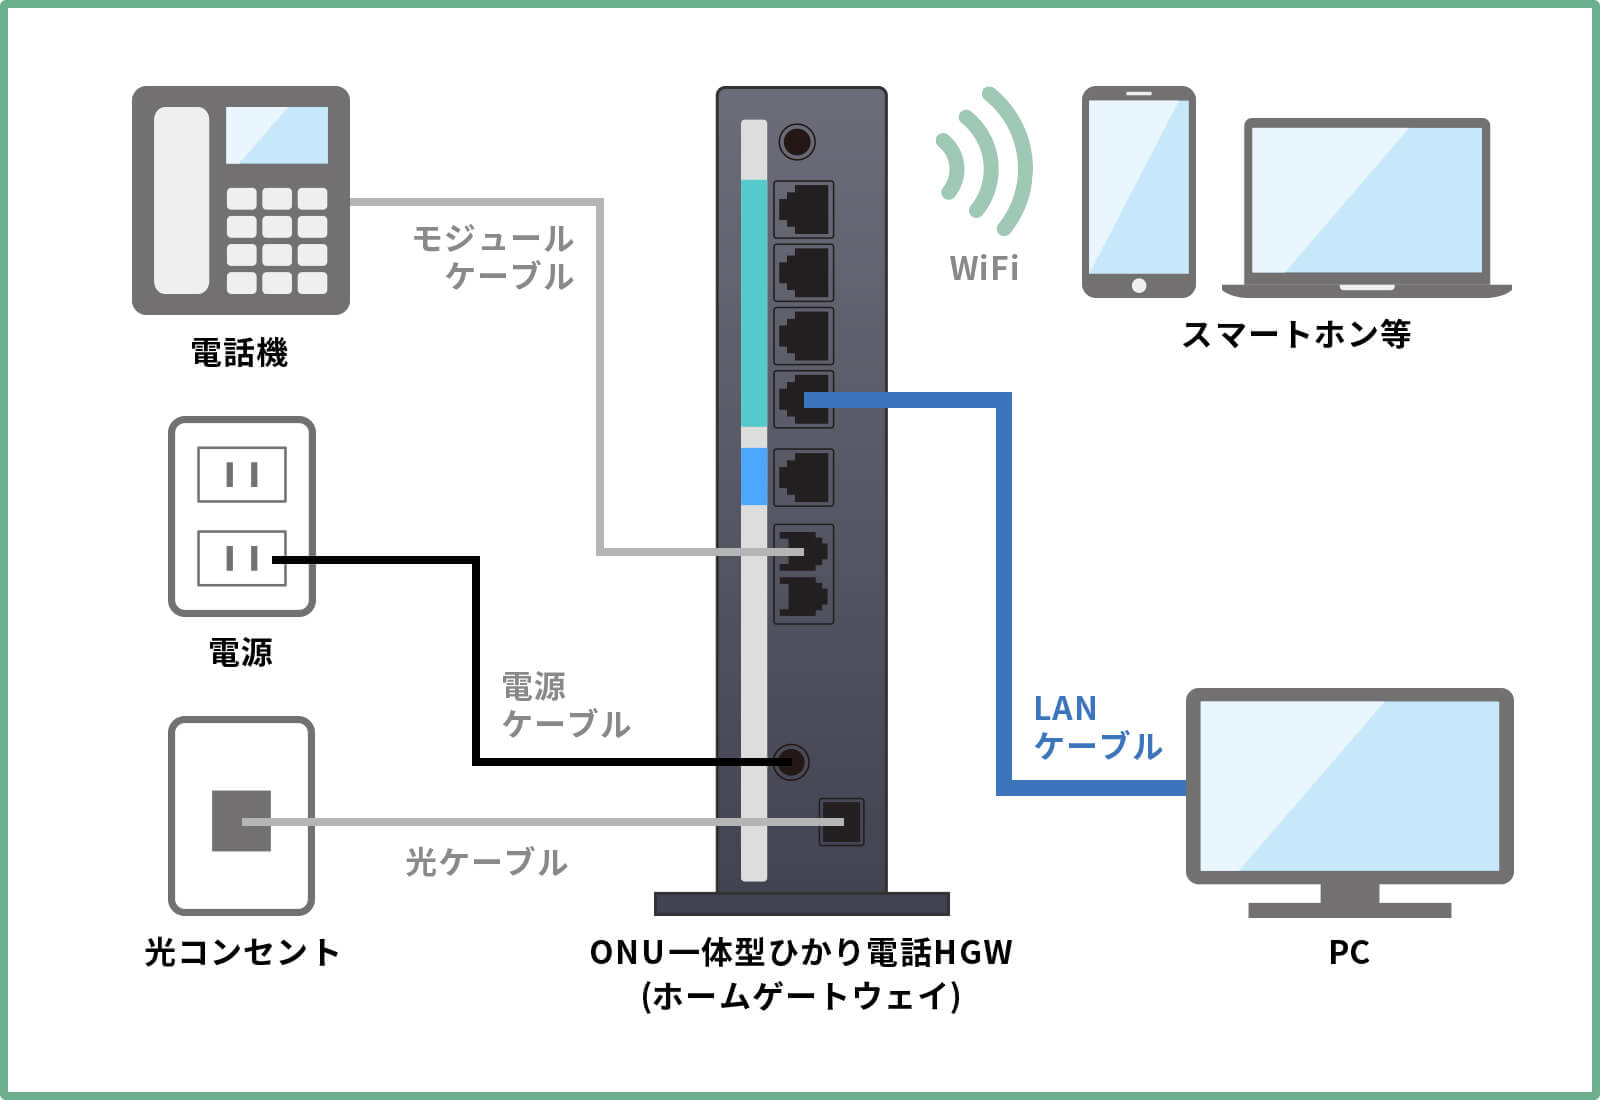 ONU一体型ひかり電話HGW（ホームゲートウェイ）に、4つのケーブル（電話機のモジュールケーブル、電源ケーブル、光コンセントの光ケーブル、パソコンのLANケーブル）と、スマートホンやモバイルへWi-Fiで繋がっている図